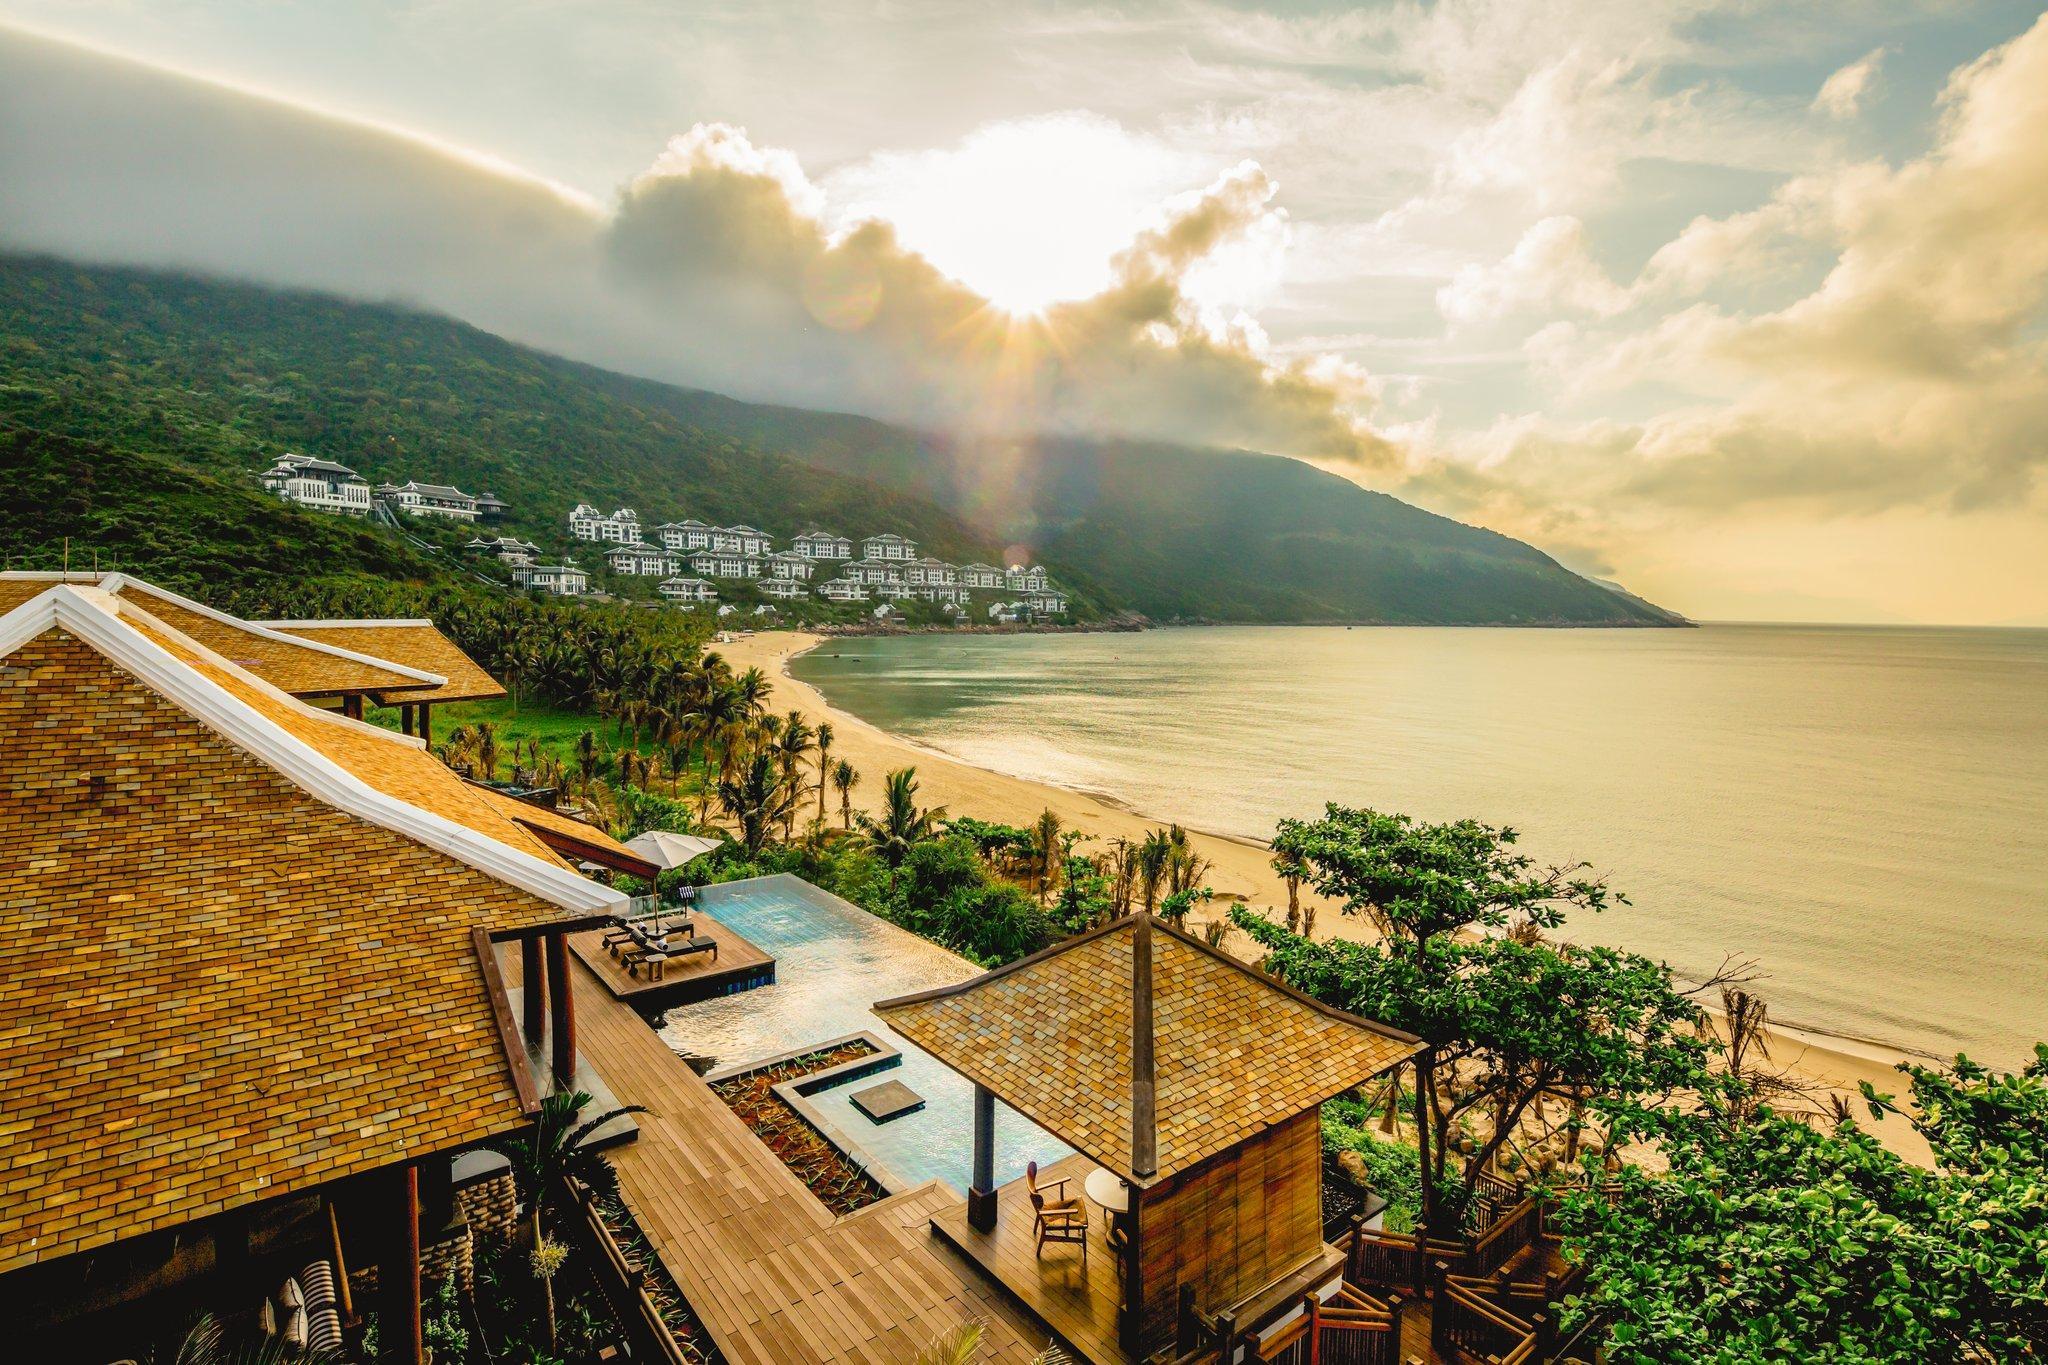 InterContinental Danang Sun Peninsula Resort - Ready for You in 2022! | Save More on Agoda